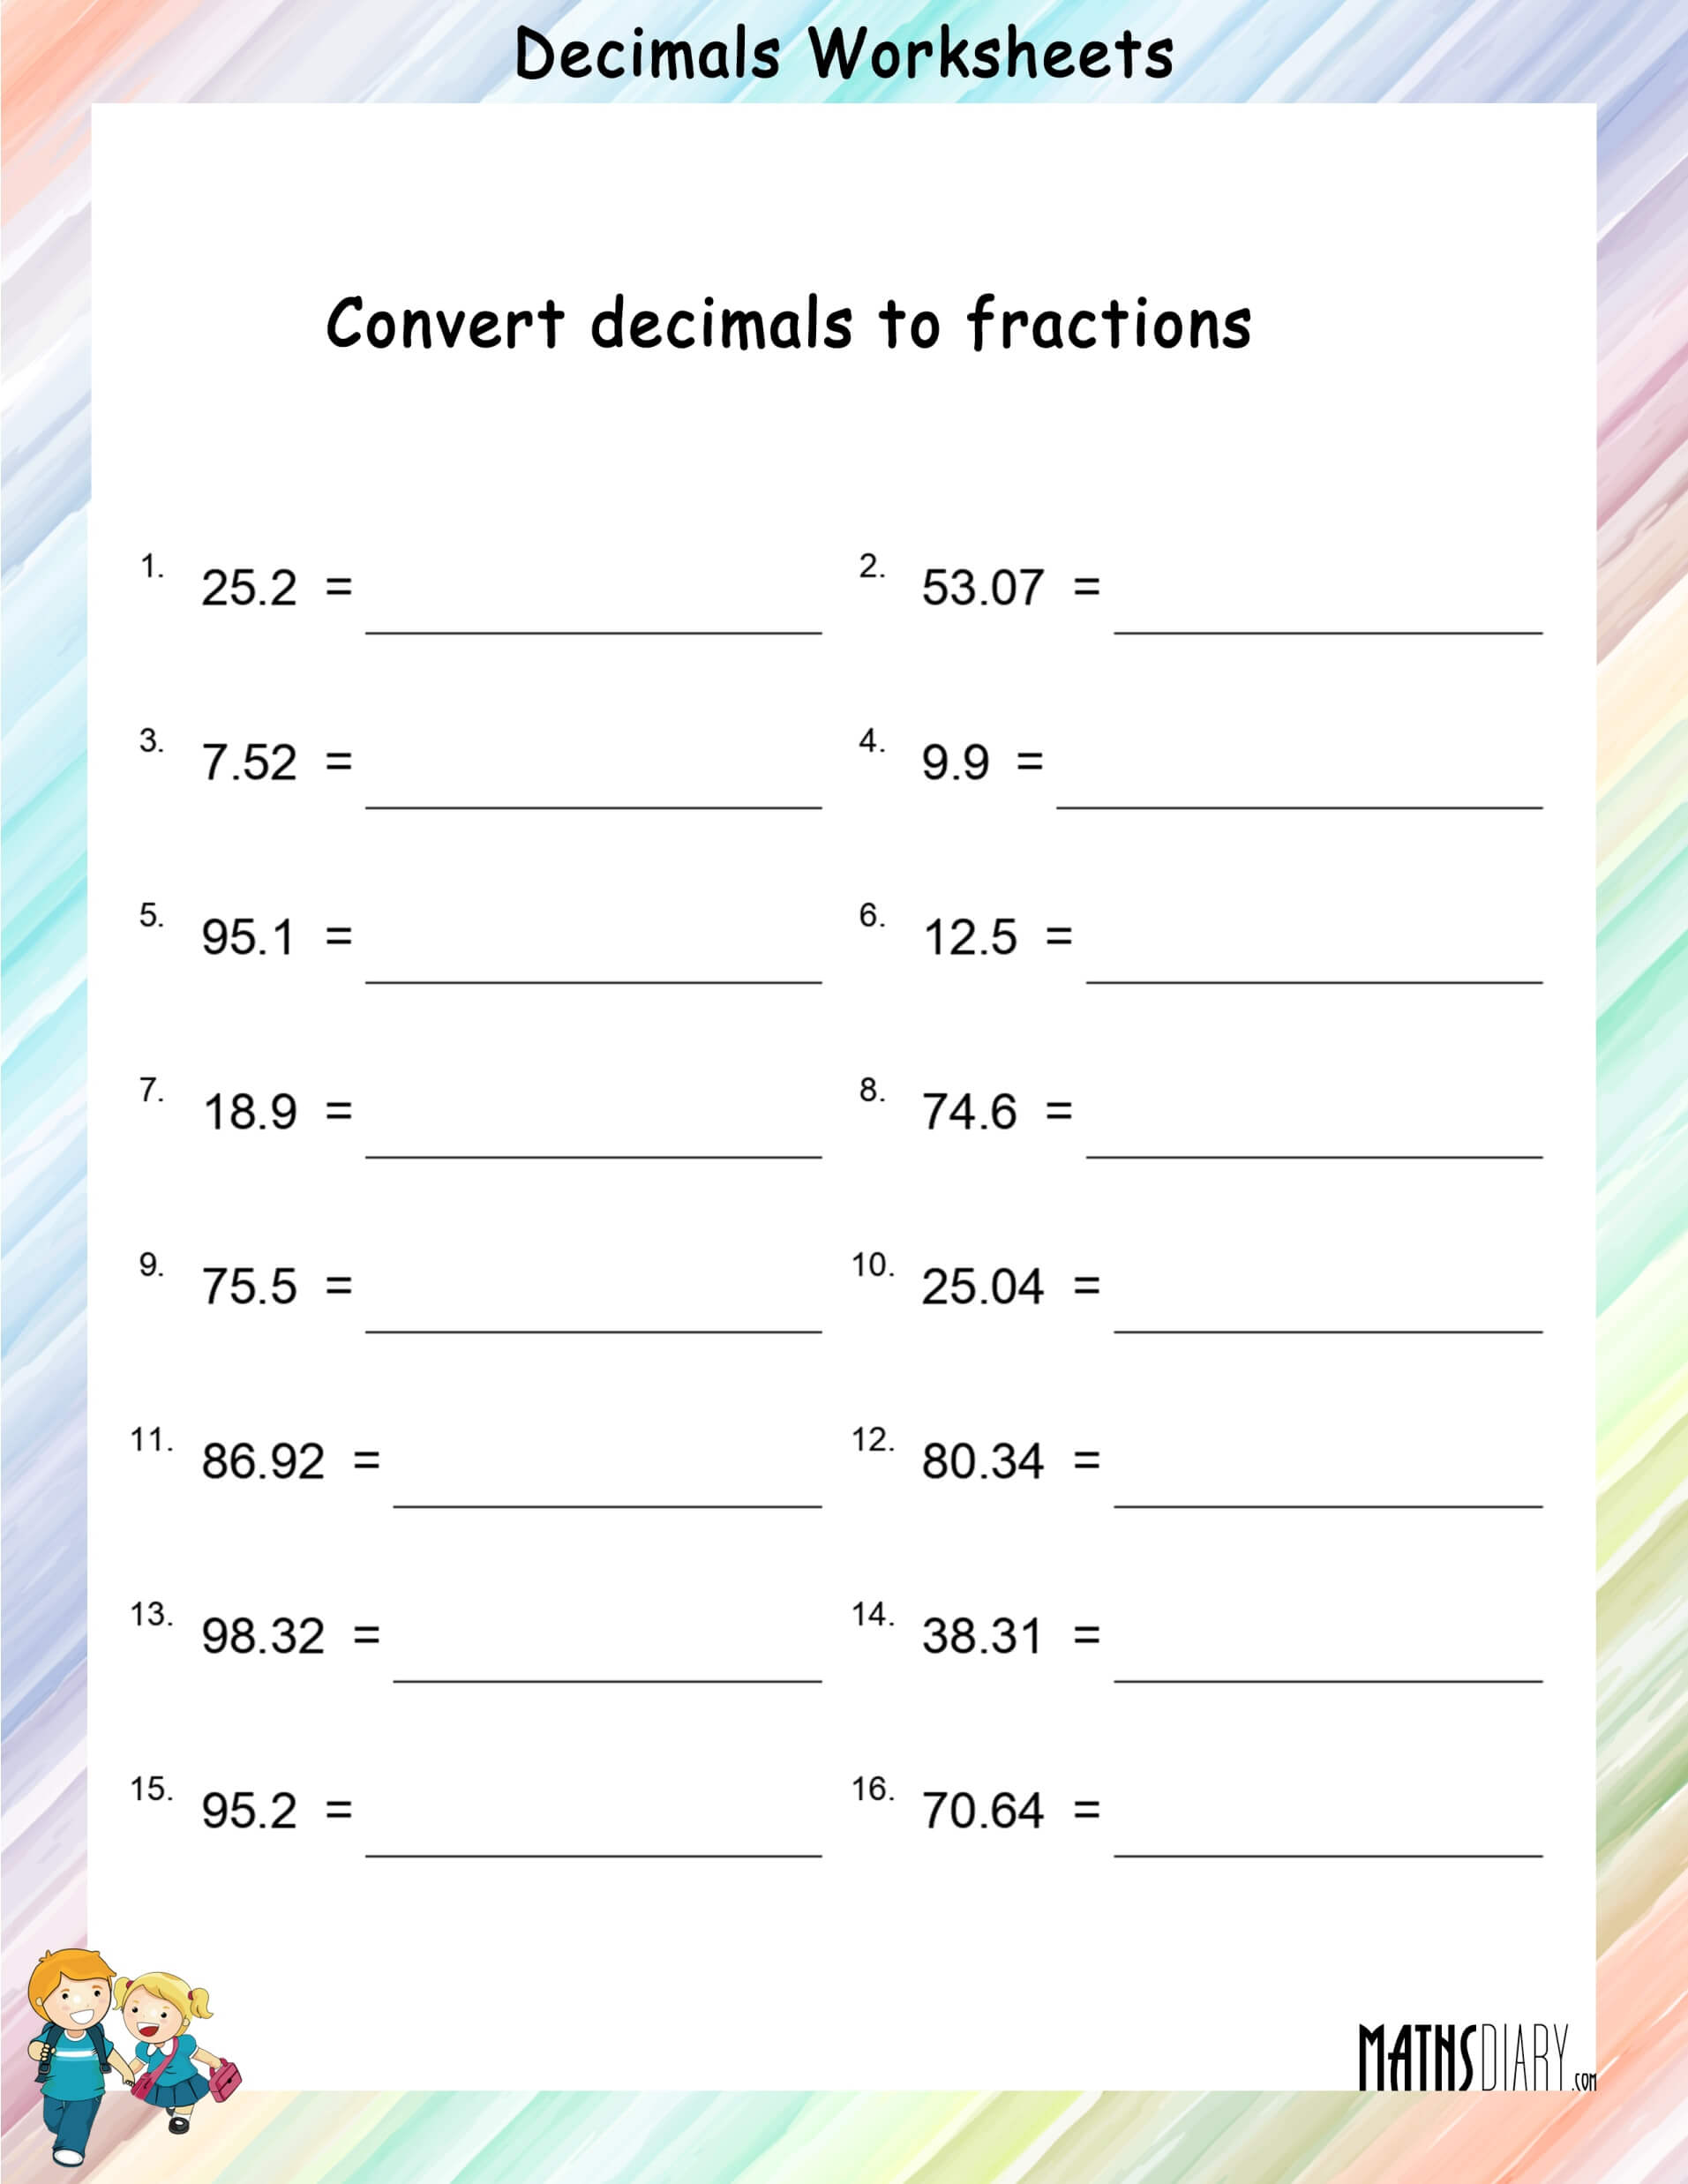 Decimals Into Fractions Worksheet - Worksheets For Kindergarten